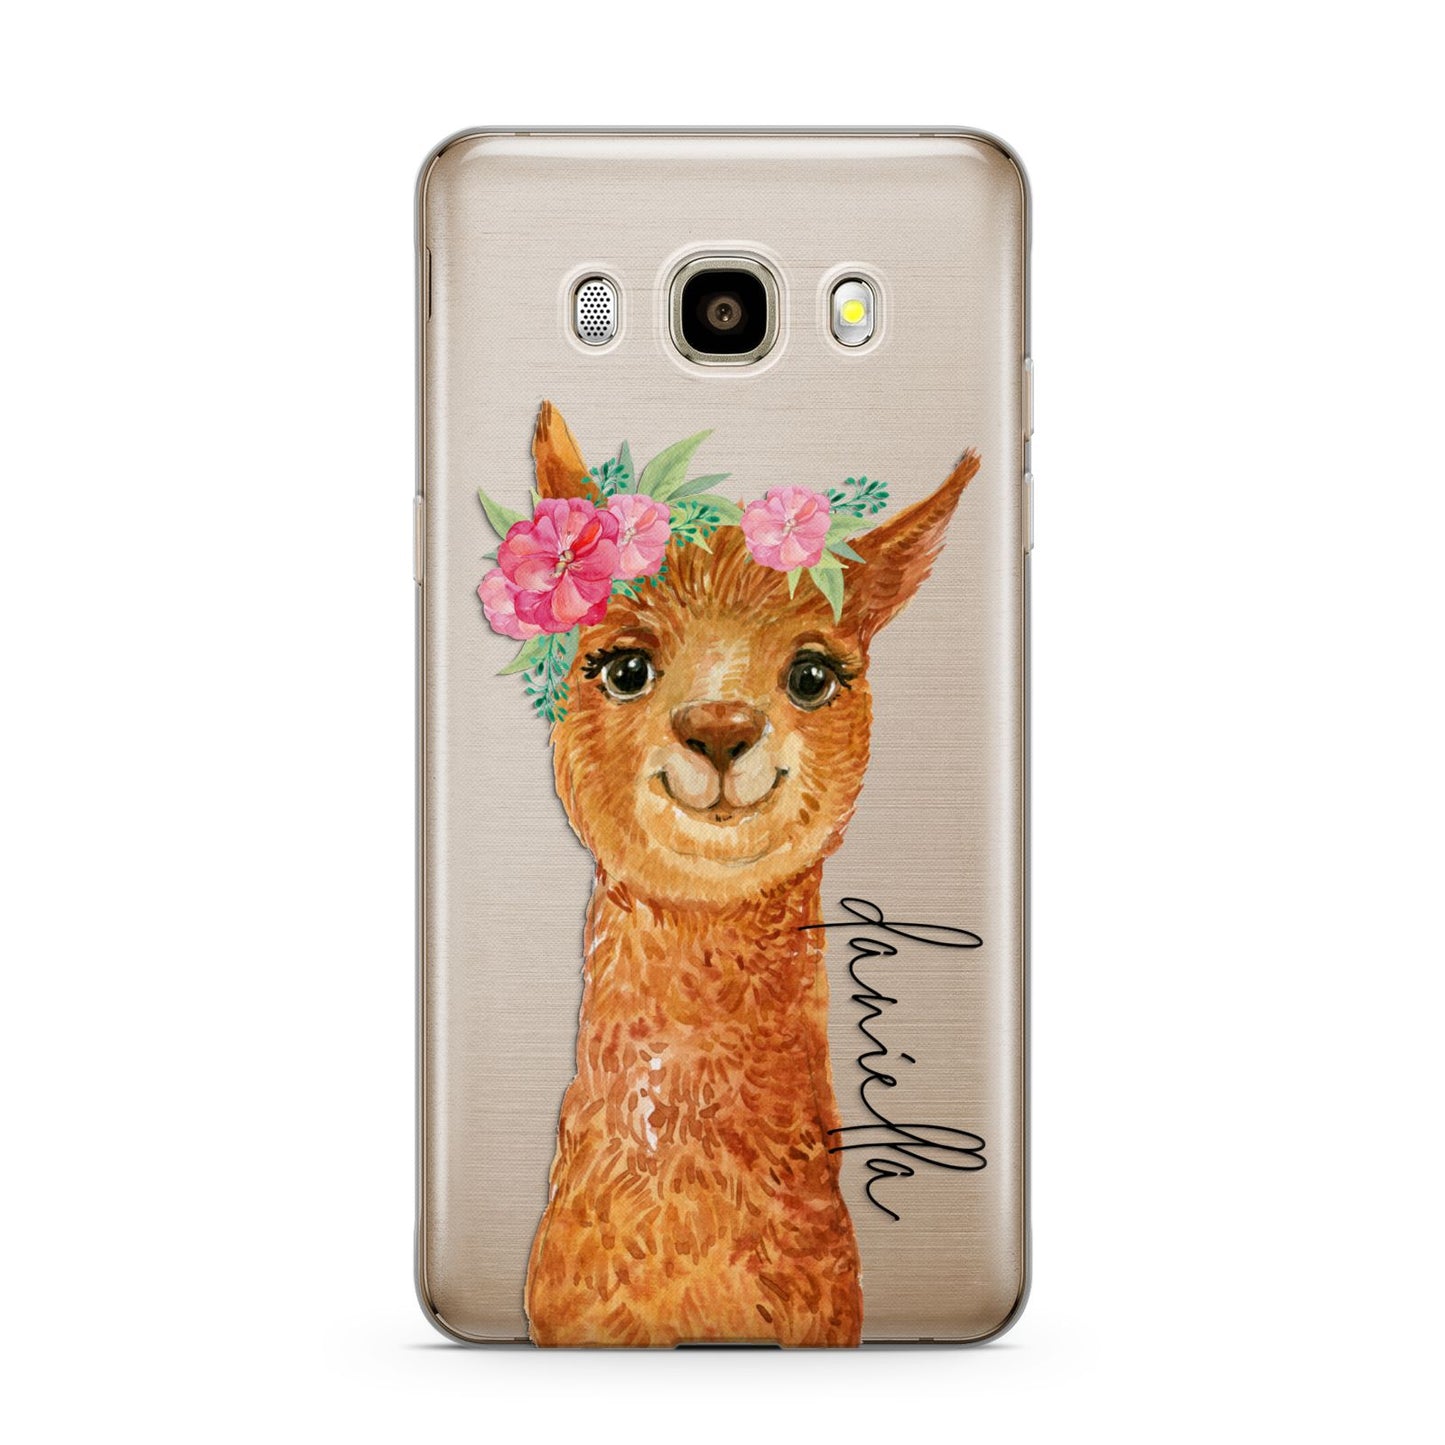 Personalised Llama Samsung Galaxy J7 2016 Case on gold phone